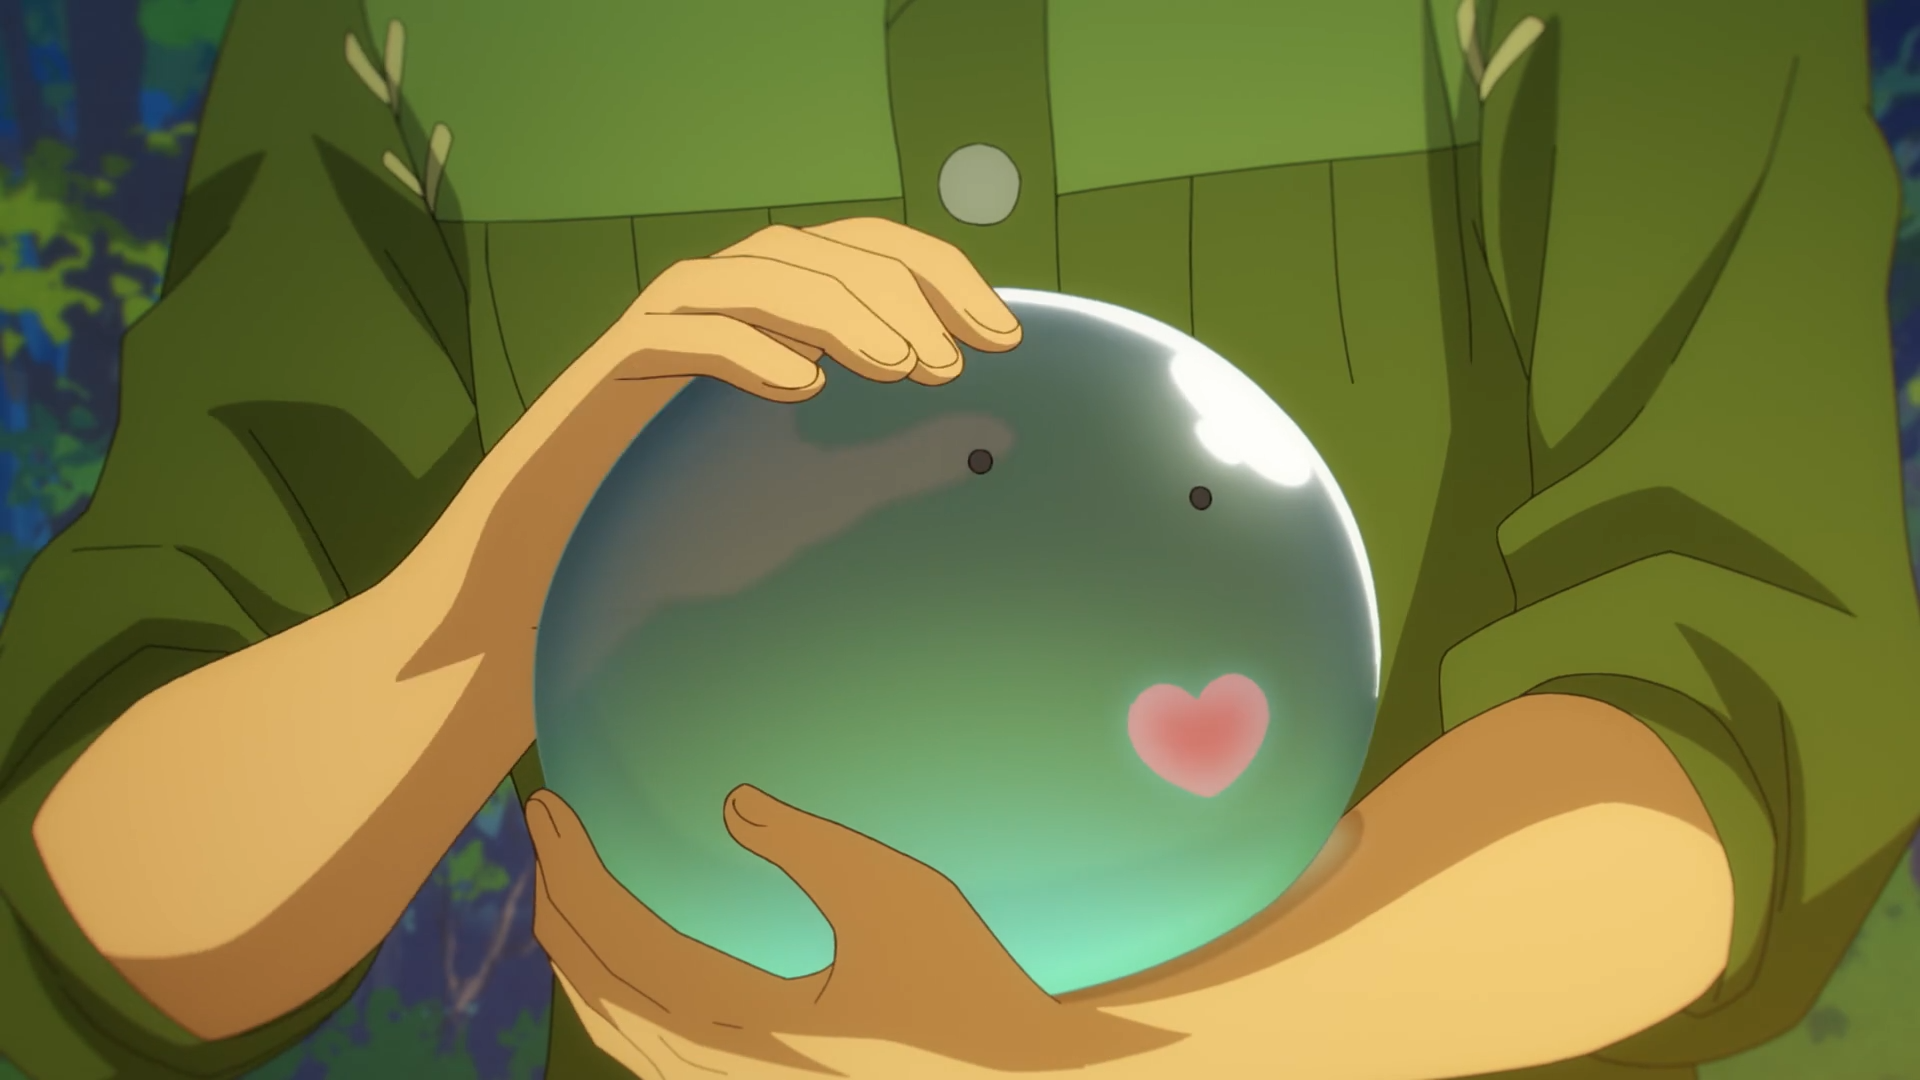 Tondemo Skill de Isekai Hourou Meshi』Episode 8 Web Preview : r/anime